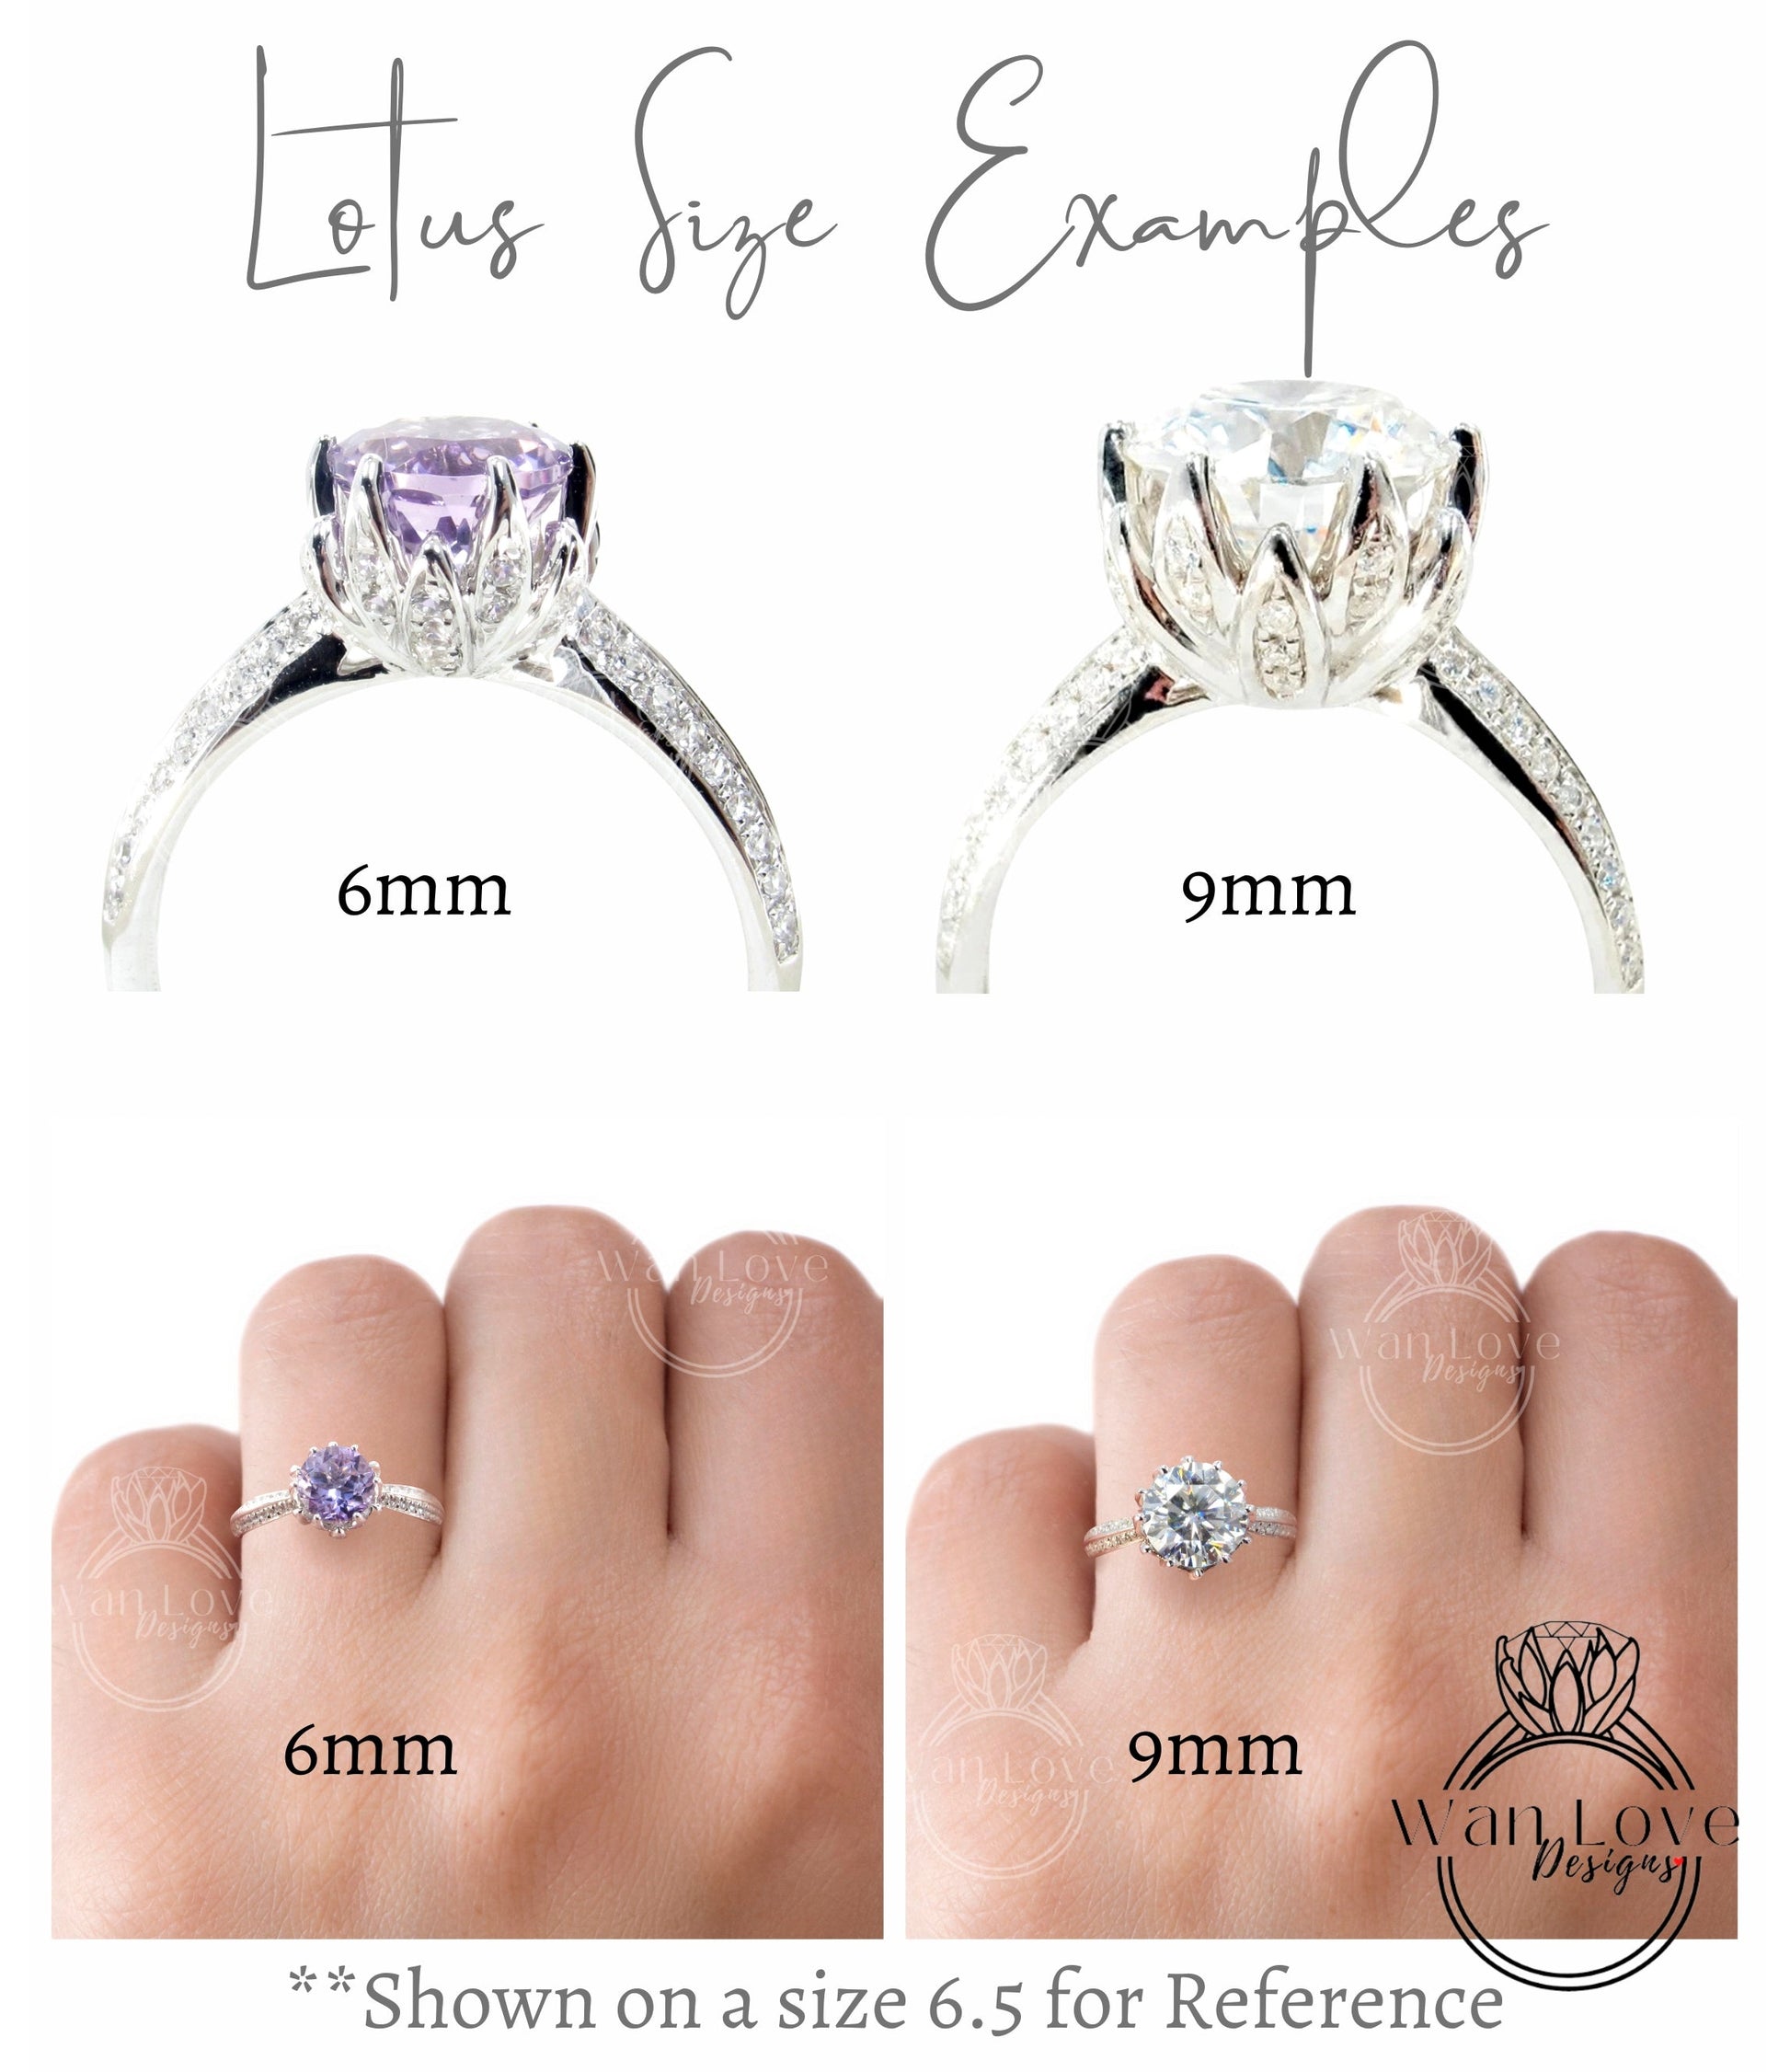 Salt Pepper & White Diamond Lotus Flower Round Engagement Ring Custom made Wedding Anniversary Gift Wan Love Designs